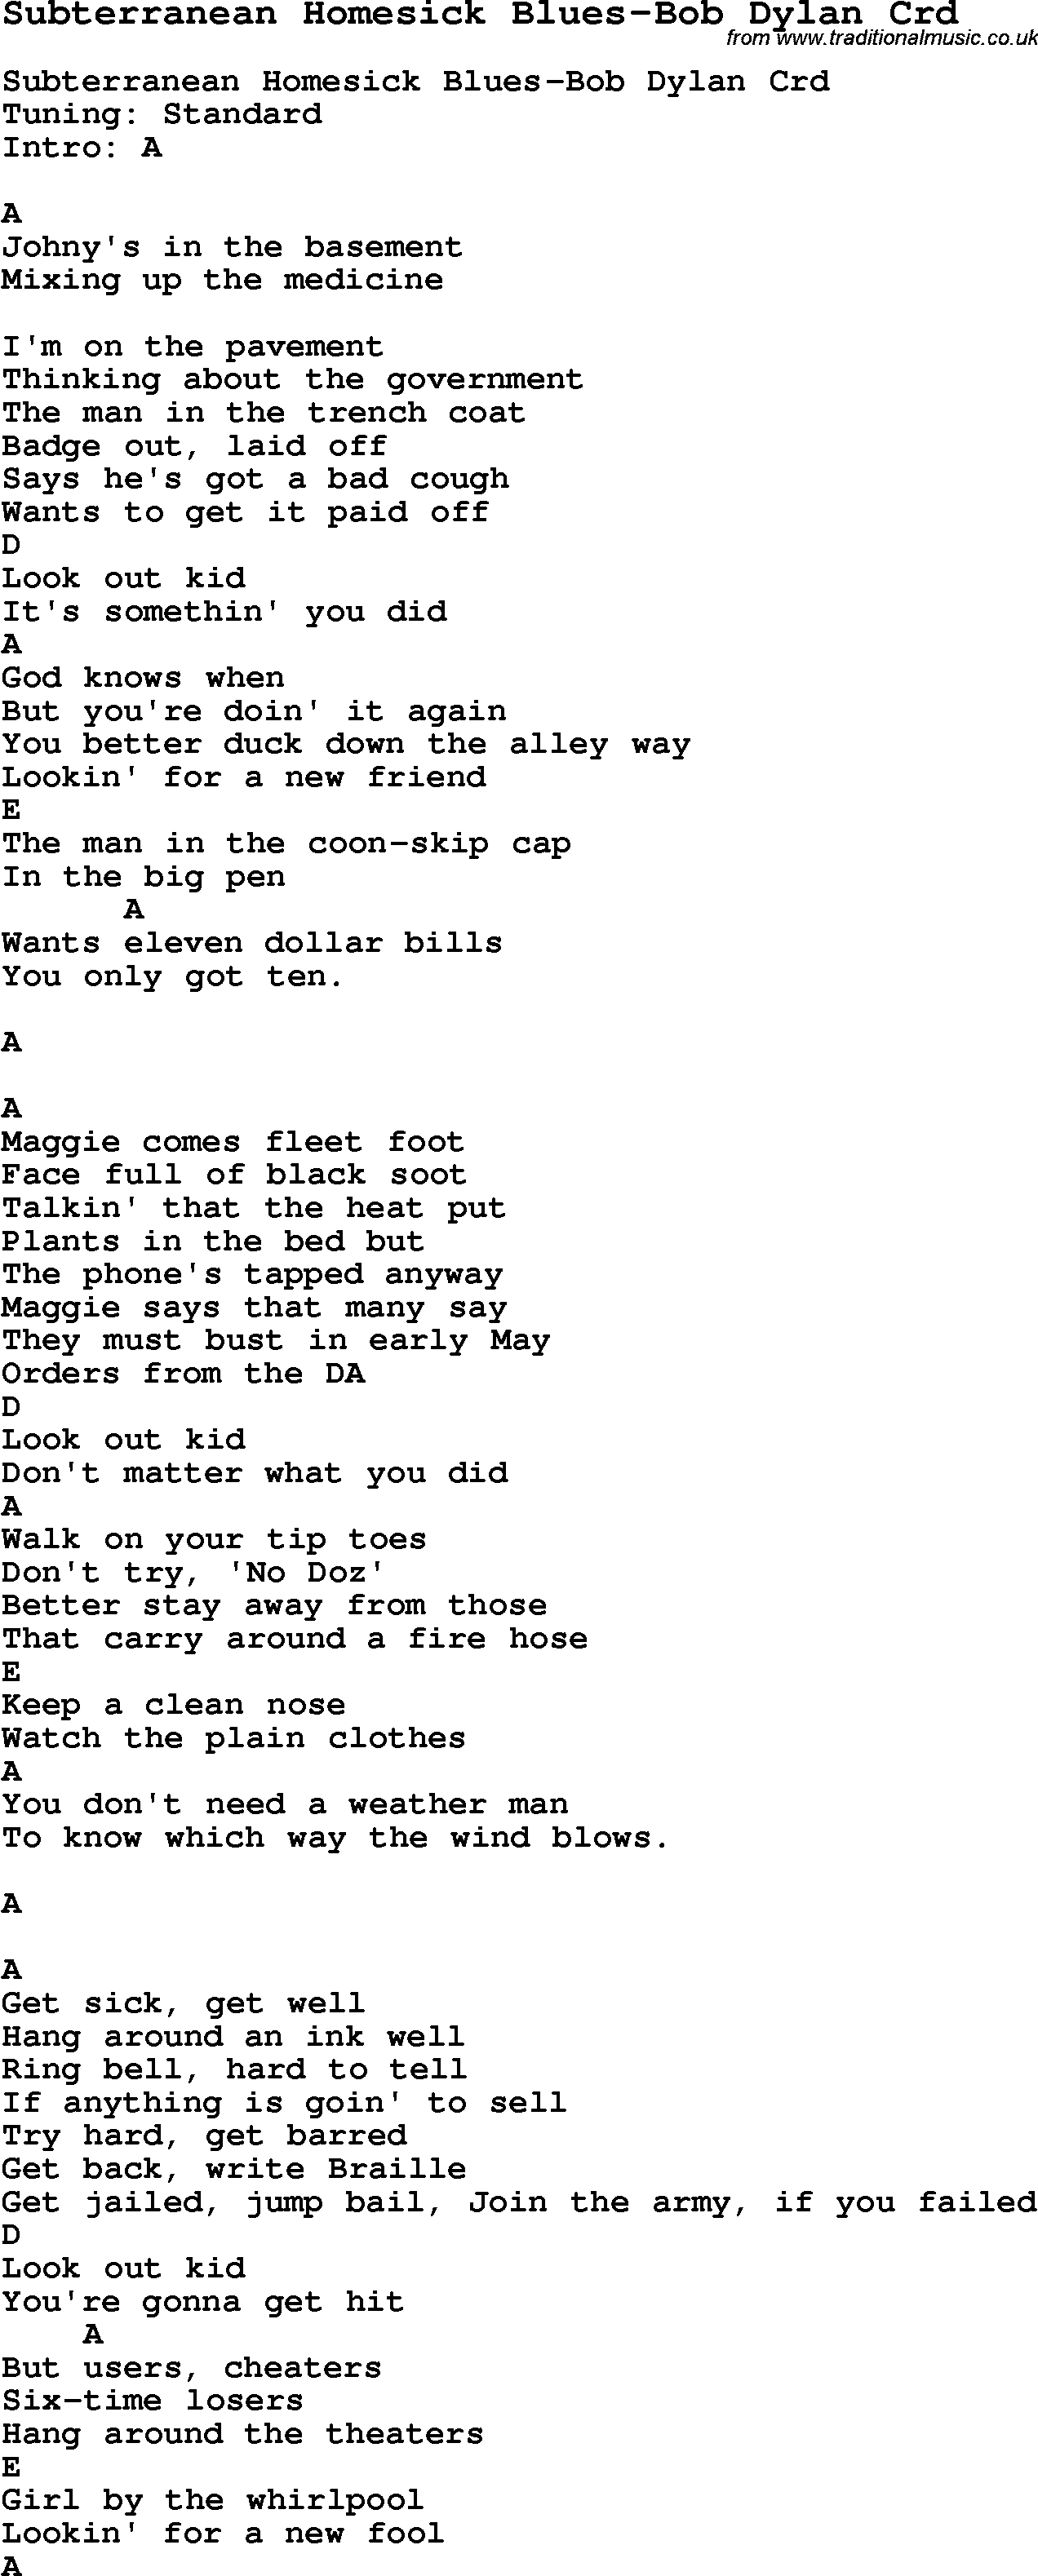 Skiffle Song Lyrics for Subterranean Homesick Blues-Bob Dylan with chords for Mandolin, Ukulele, Guitar, Banjo etc.